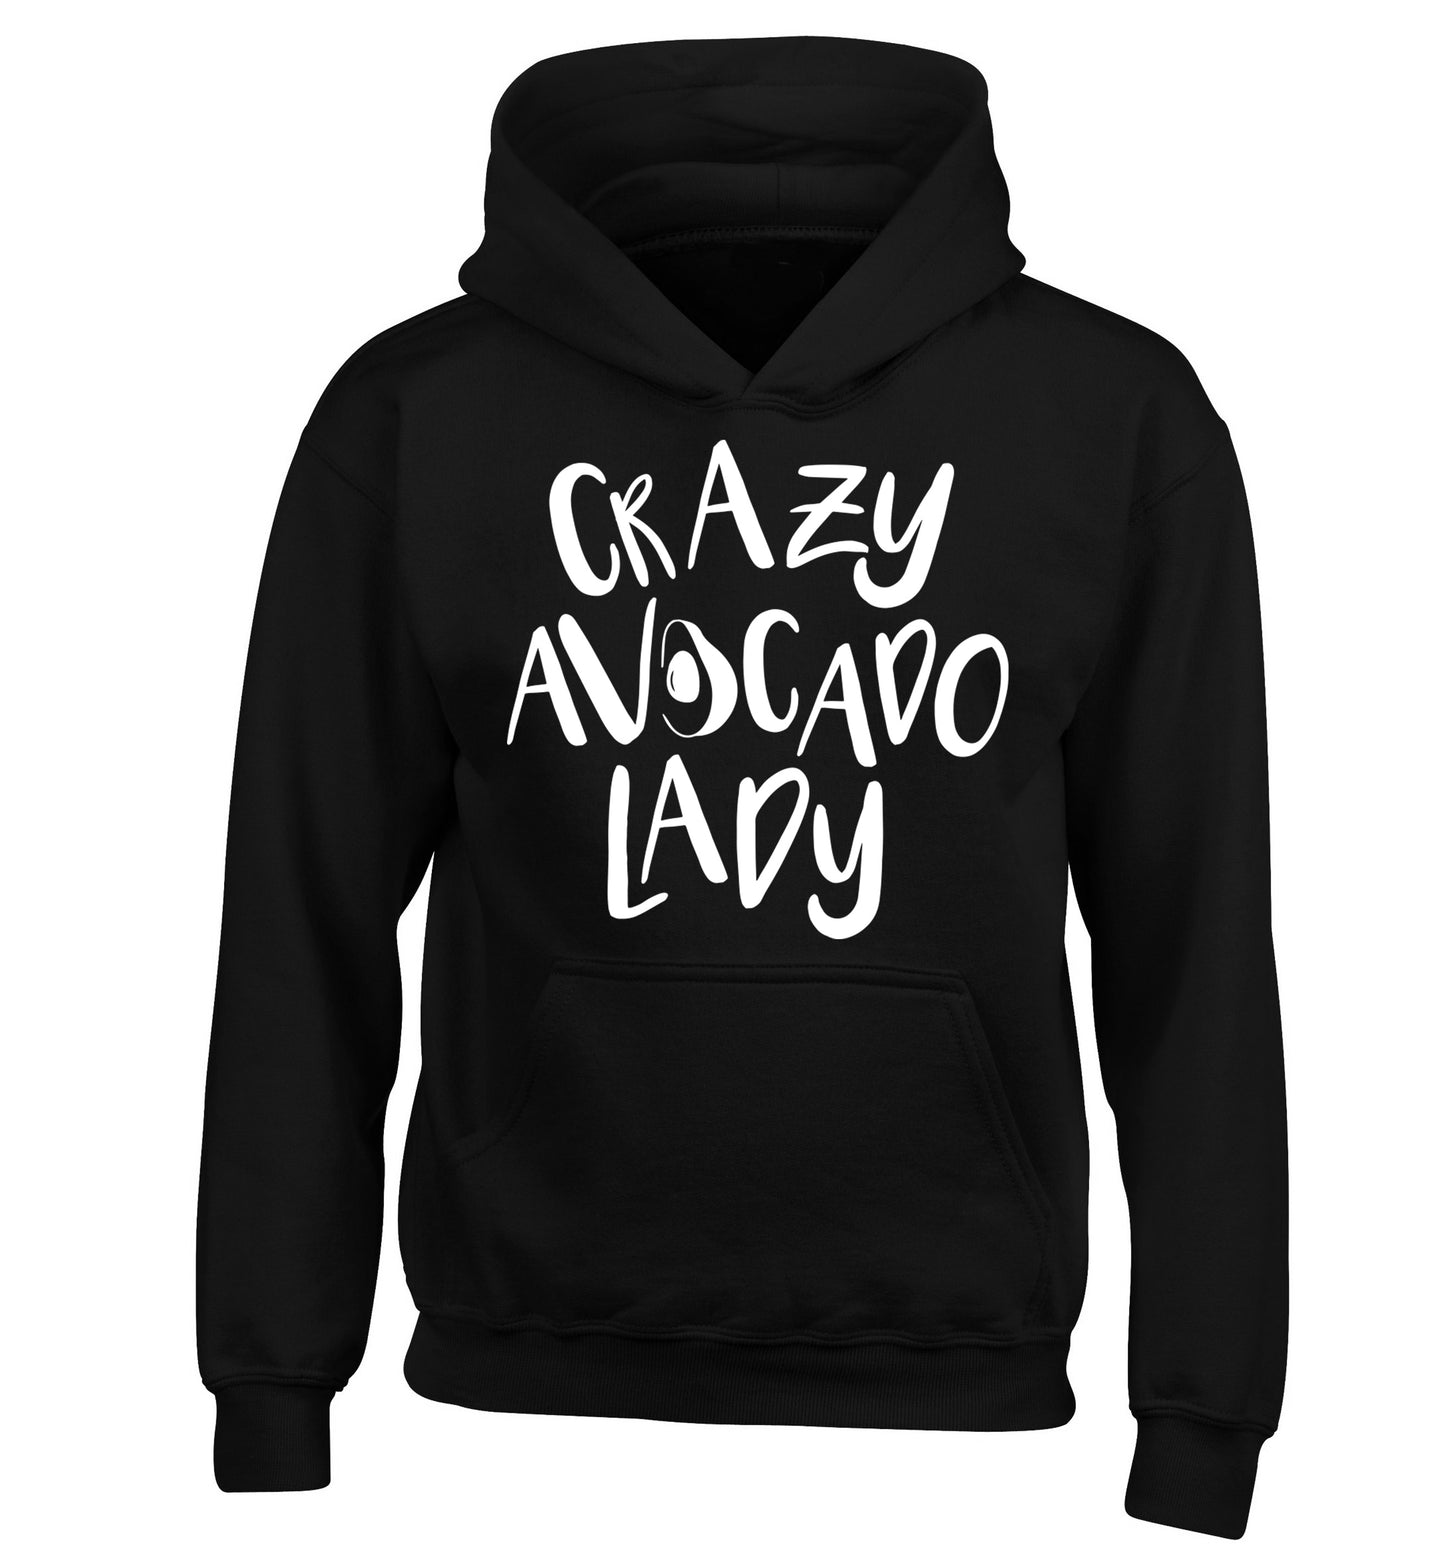 Crazy avocado lady children's black hoodie 12-14 Years